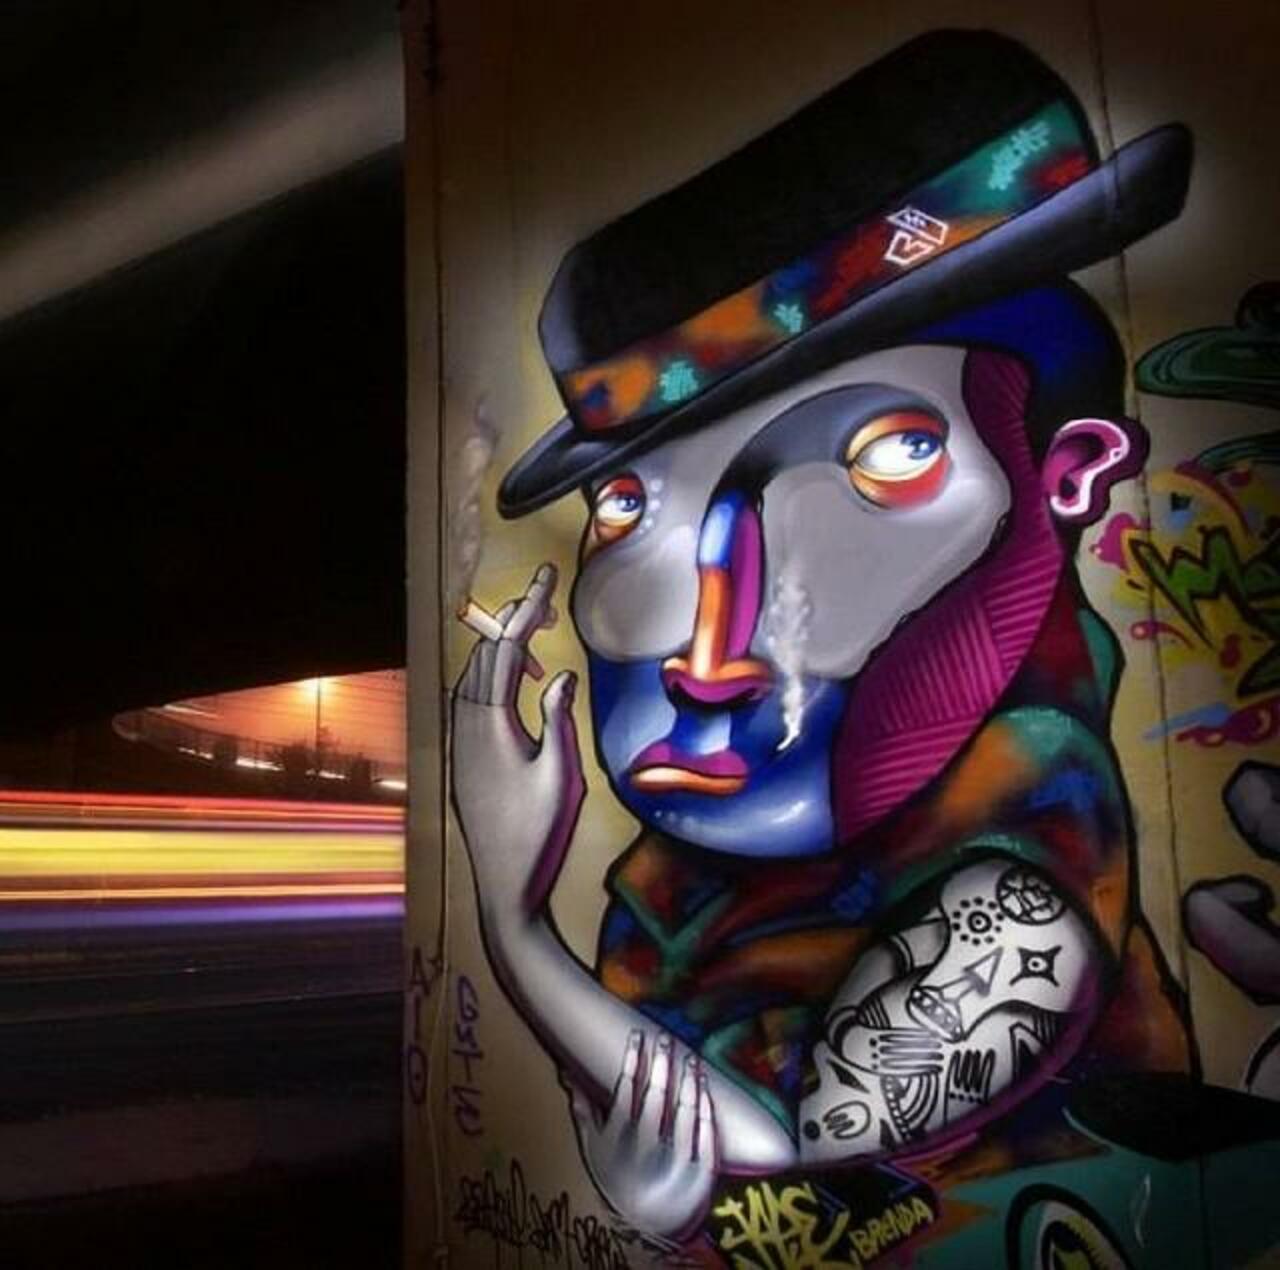 “@GoogleStreetArt: Abstract Street Art by Jade Rivera 

#art #mural #graffiti #streetart http://t.co/0ChkL2AGia”